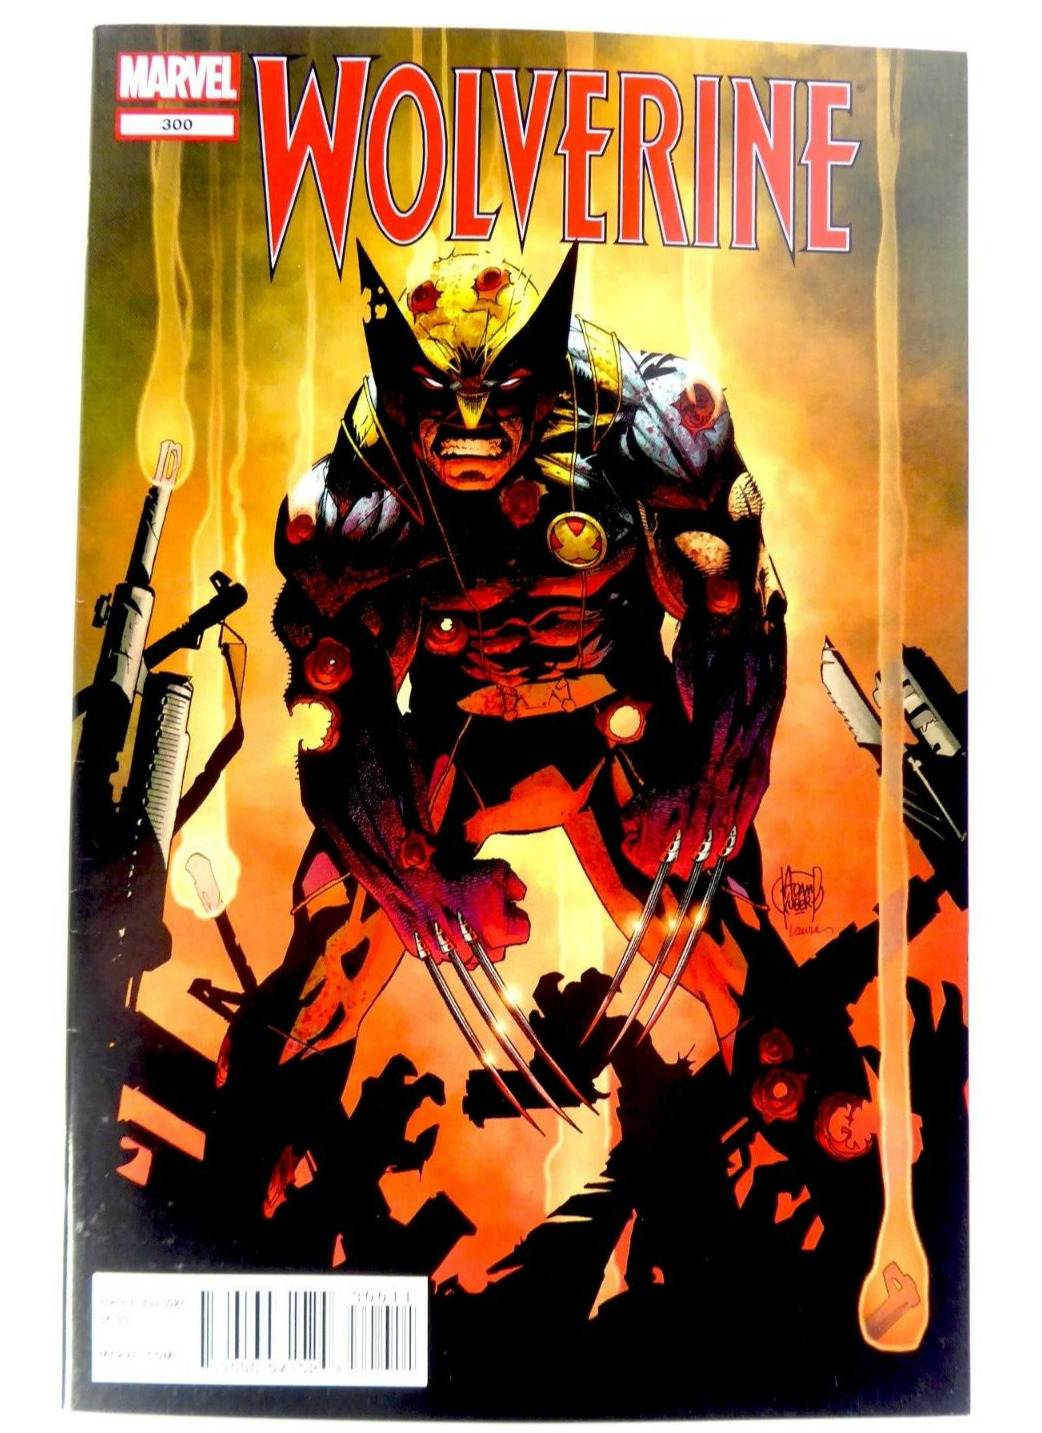 Marvel WOLVERINE (2012) #300 Iconic KUBERT Cover VF/NM (9.0) Ships FREE